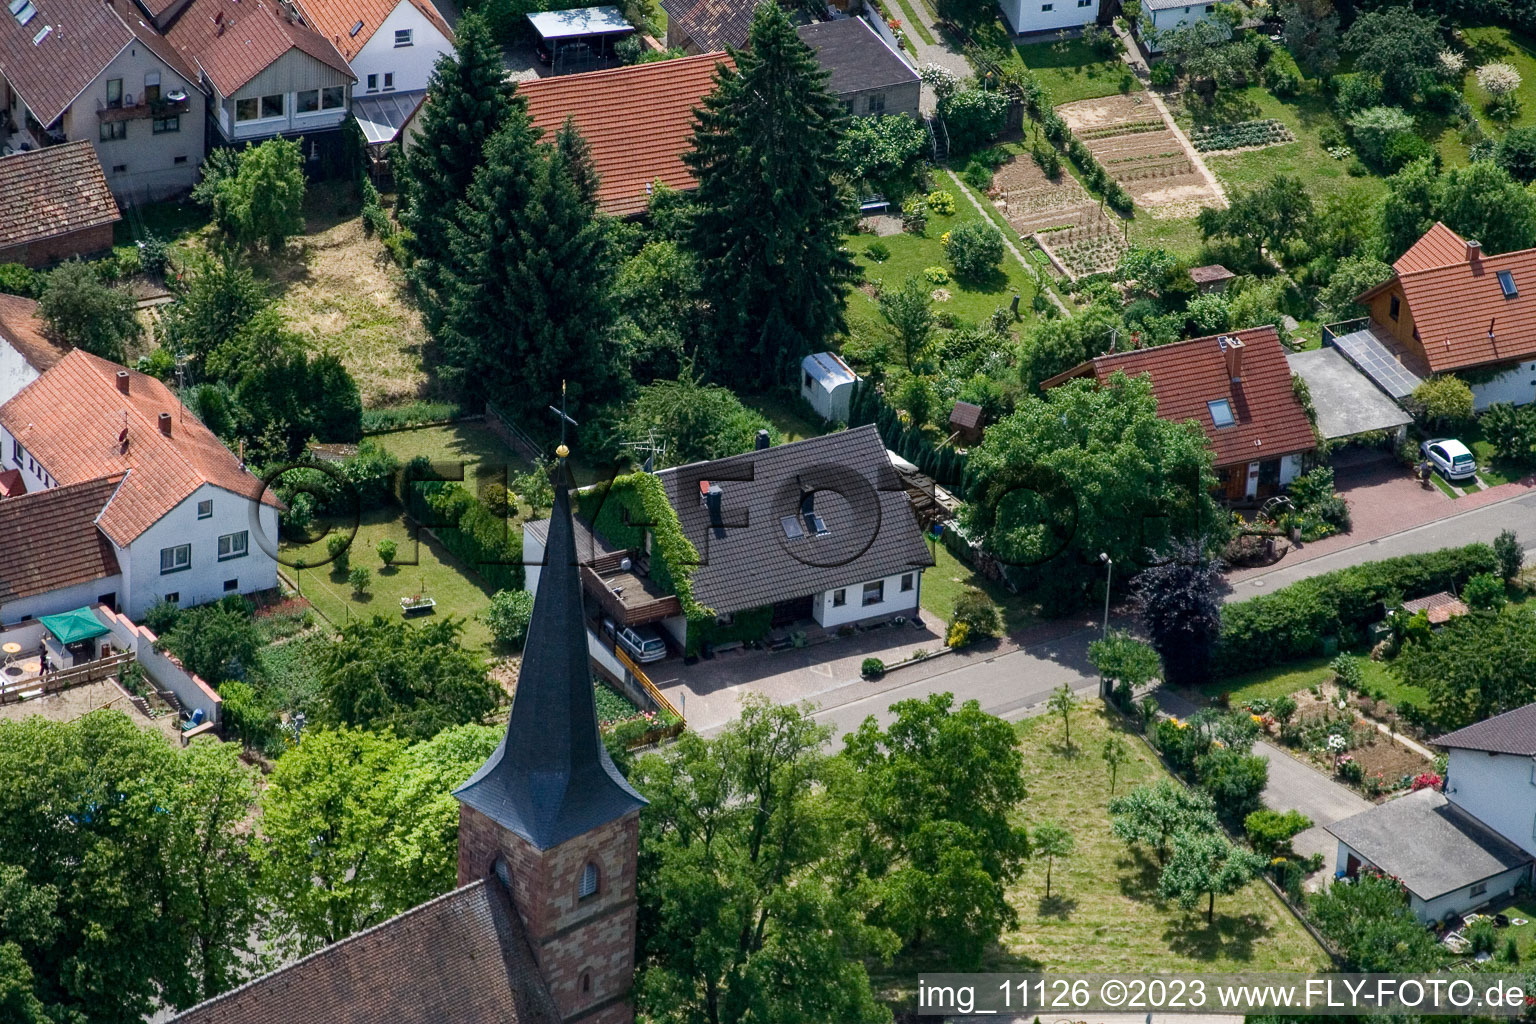 Quartier Rechtenbach in Schweigen-Rechtenbach dans le département Rhénanie-Palatinat, Allemagne vue d'en haut